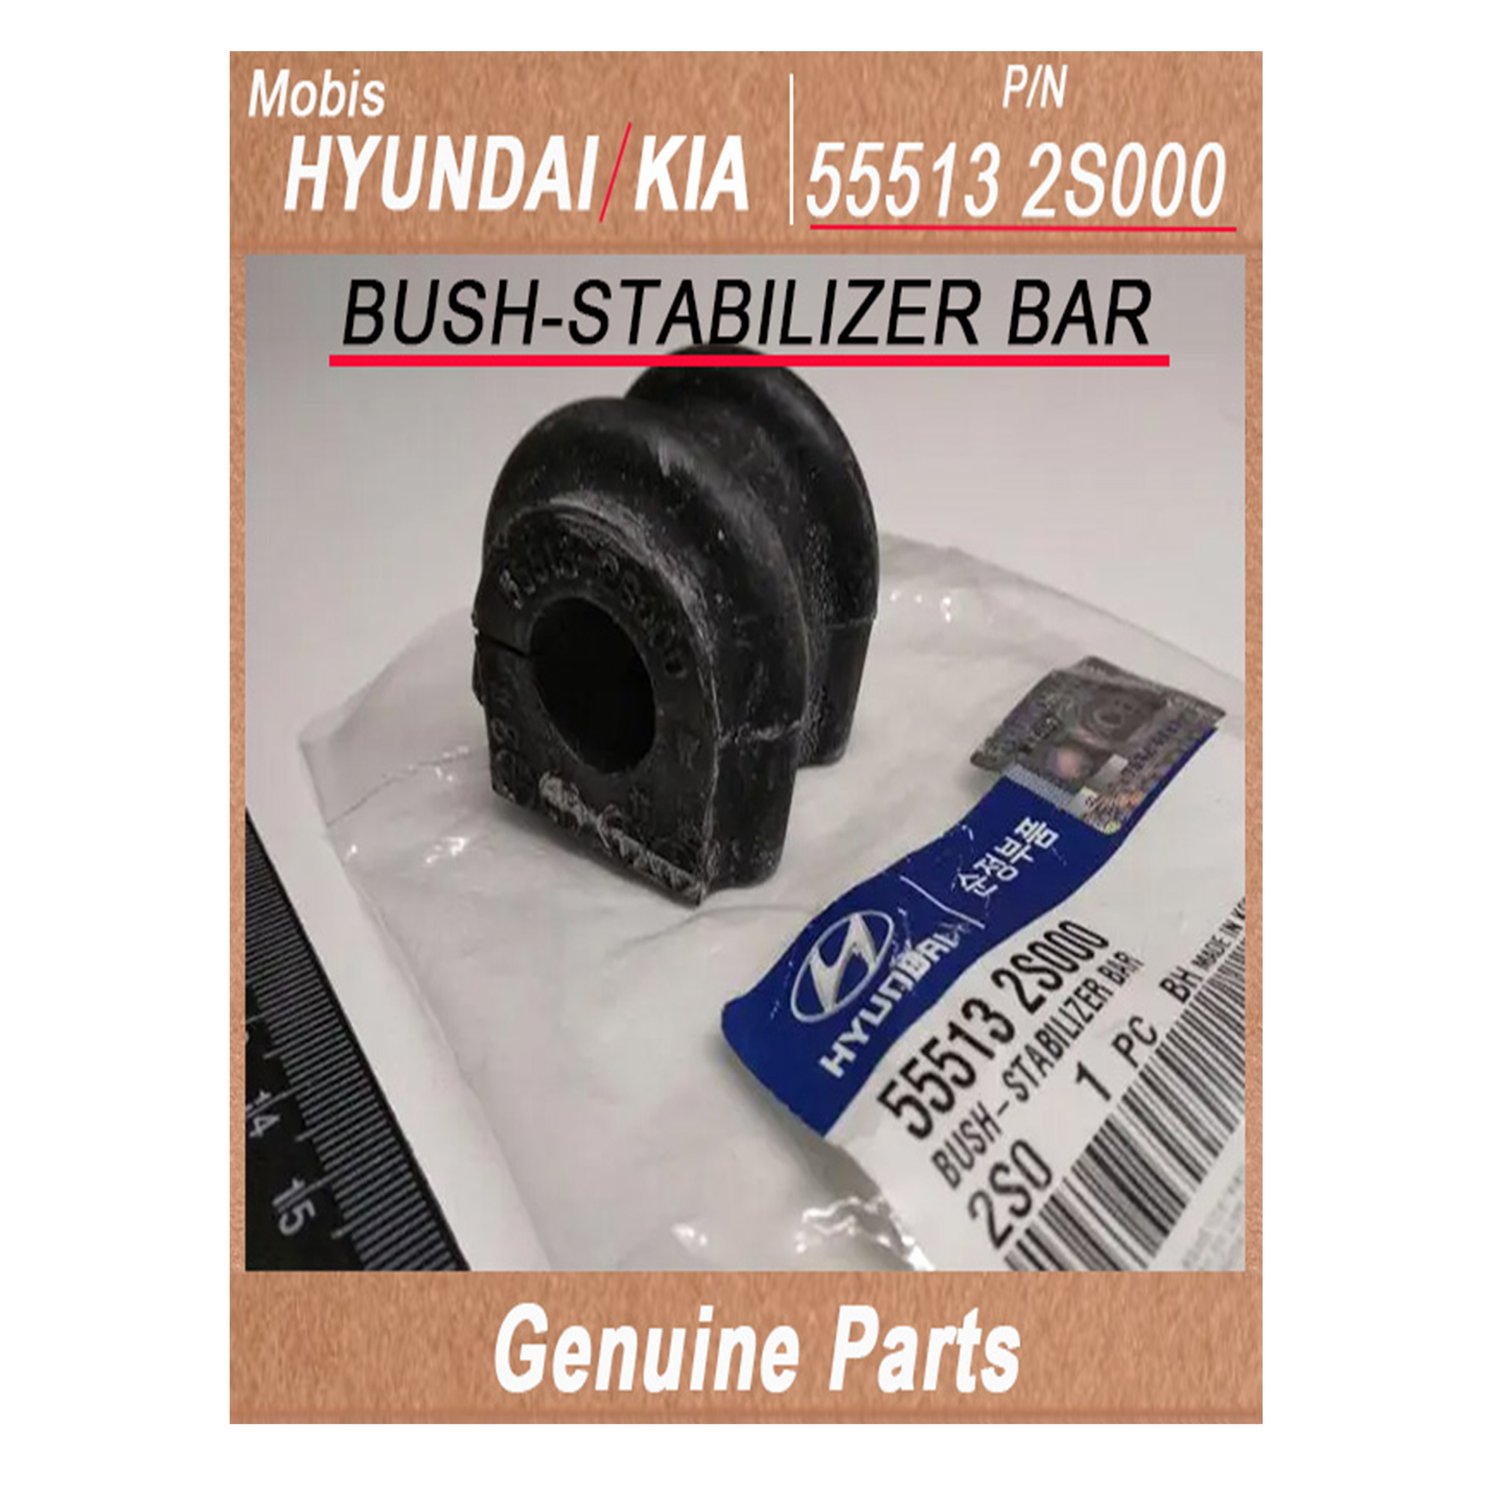 555132S000 _ BUSH_STABILIZER BAR _ Genuine Korean Automotive Spare Parts _ Hyundai Kia _Mobis_